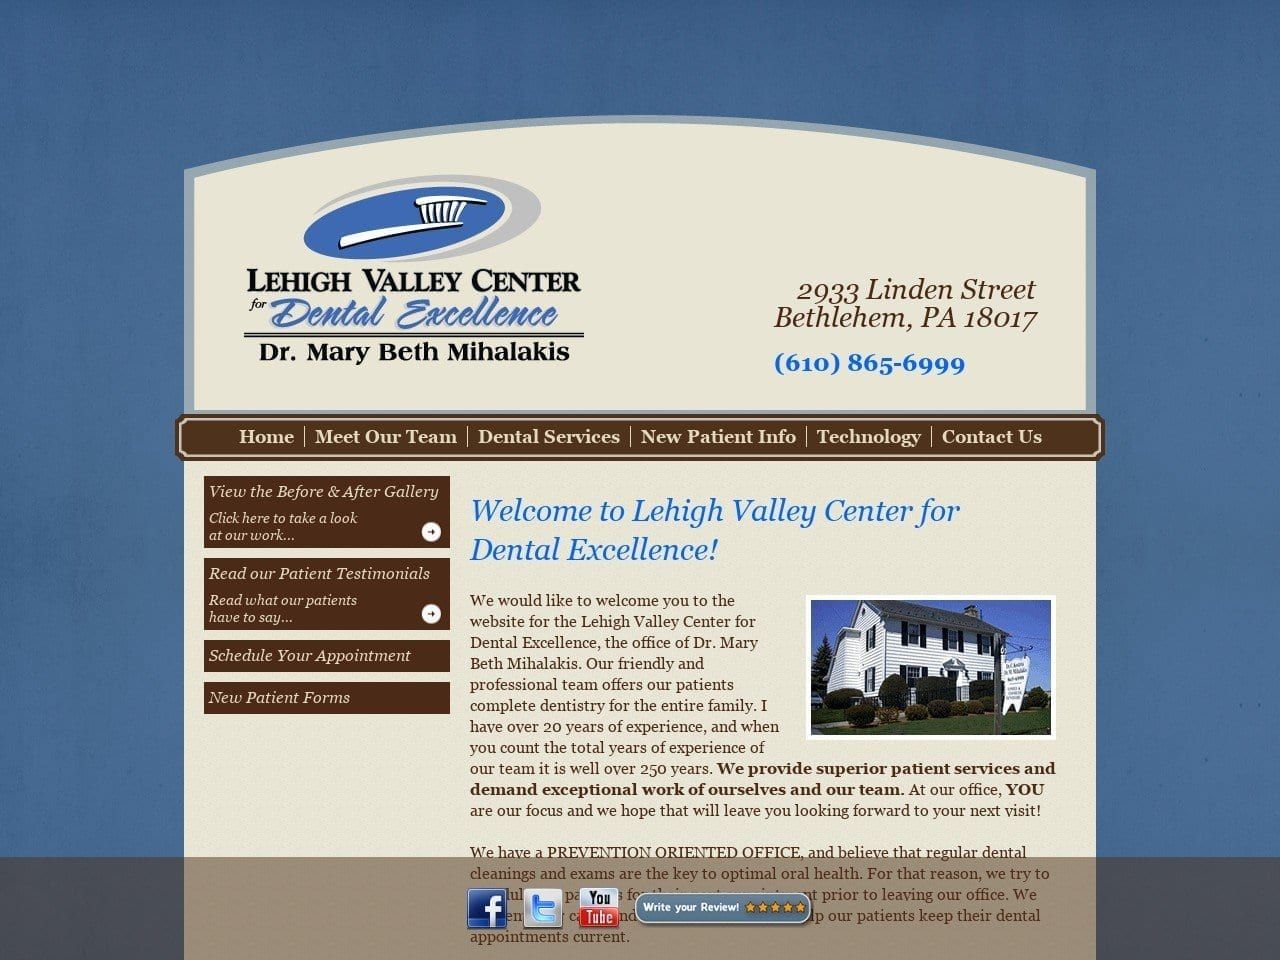 Lehigh Valley Center for Dental Excellence Website Screenshot from lvcde.com